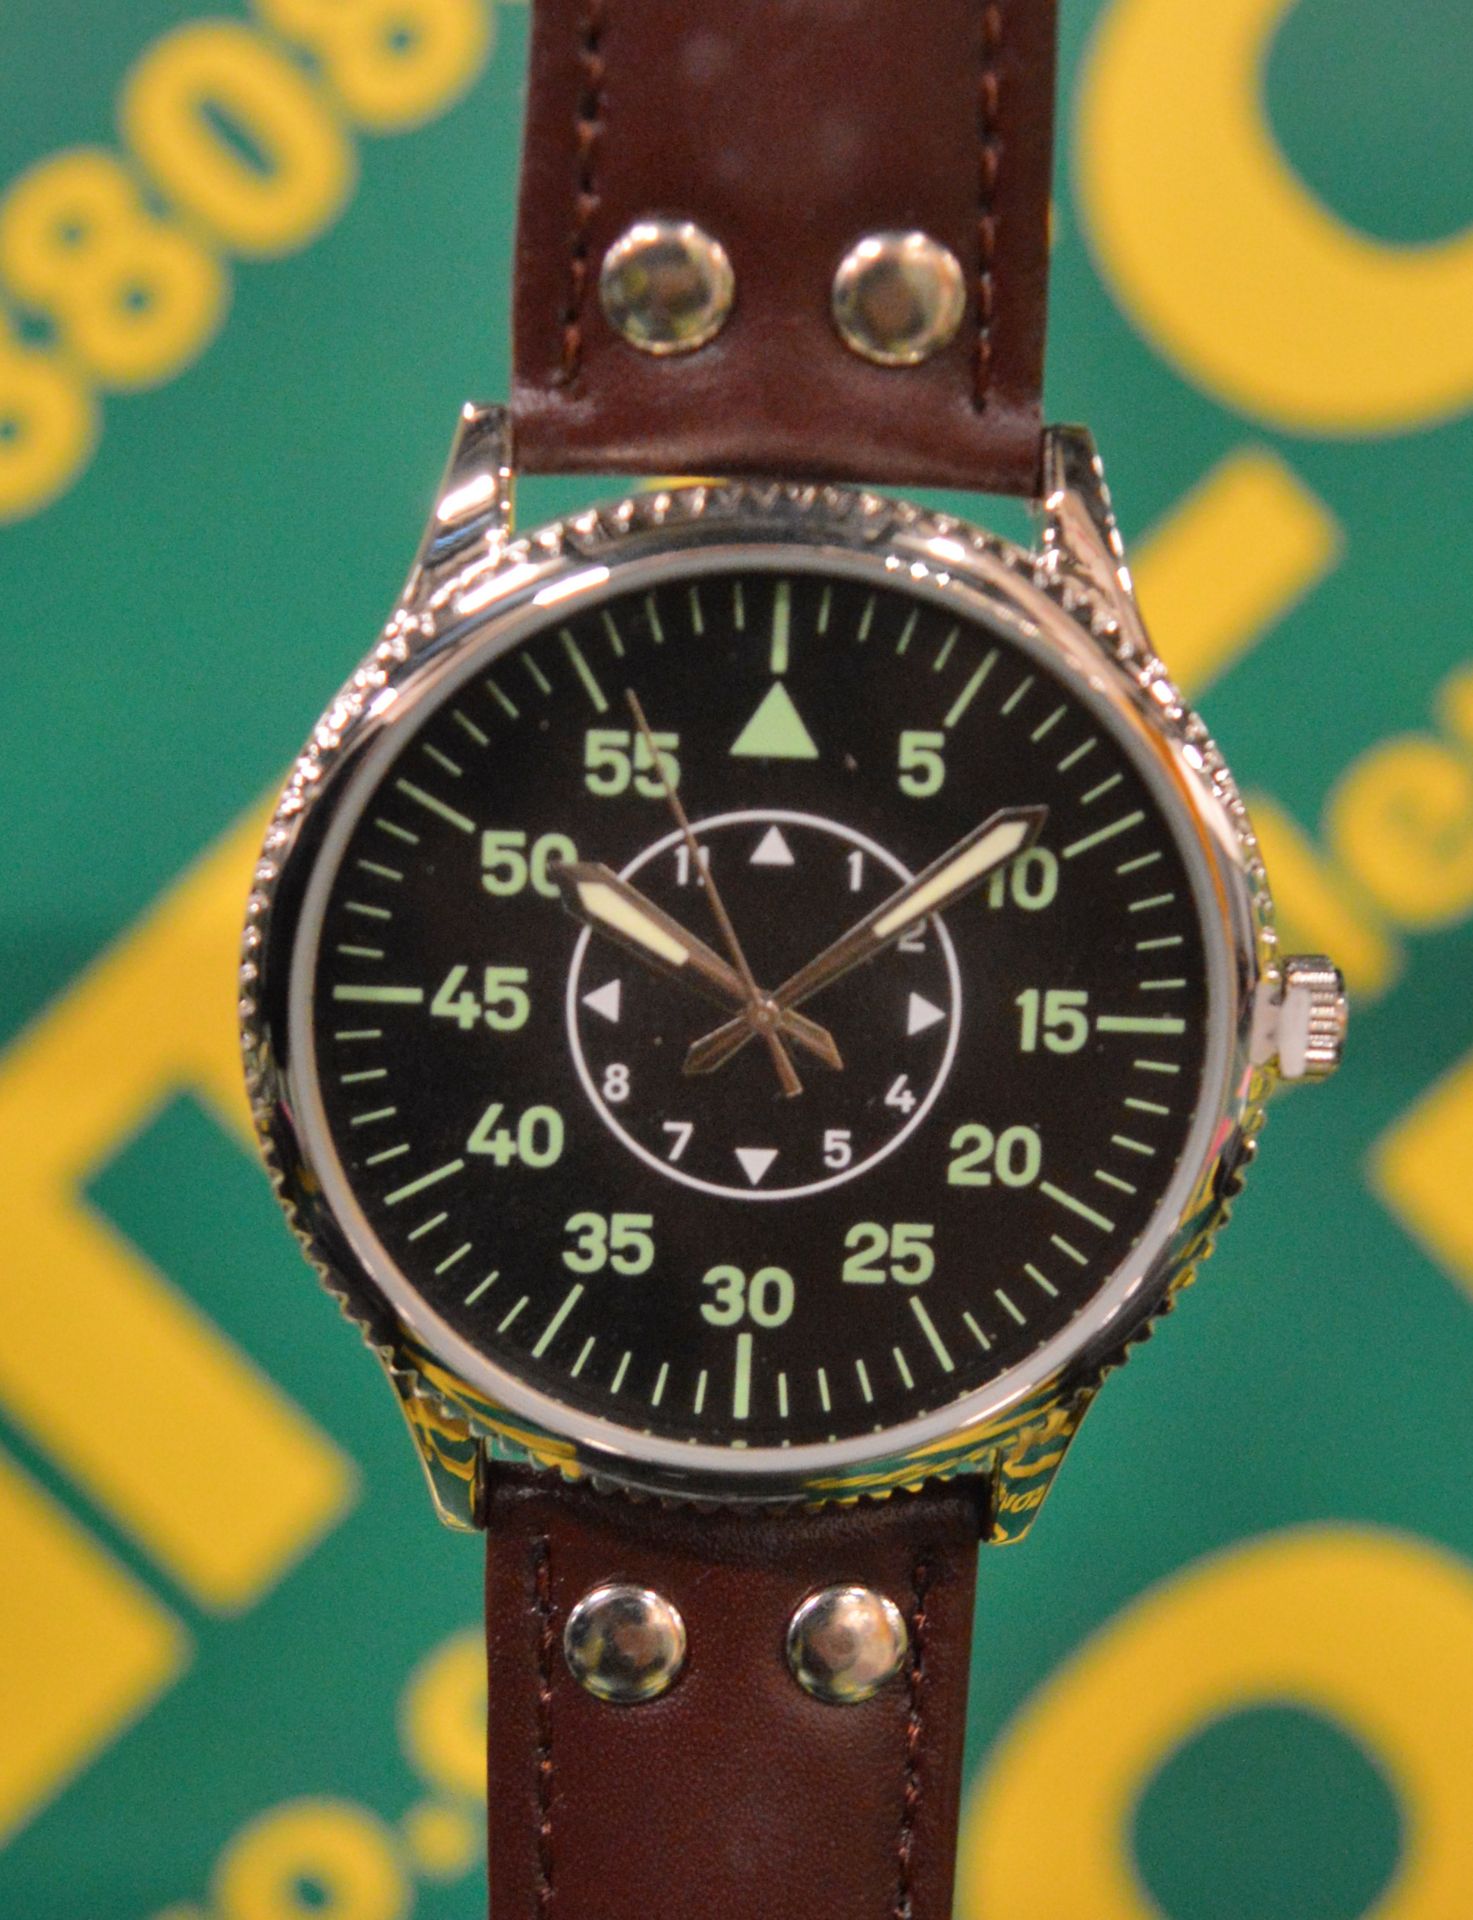 Reproduction Wristwatch - Luftwaffe Aviator. - Image 2 of 2